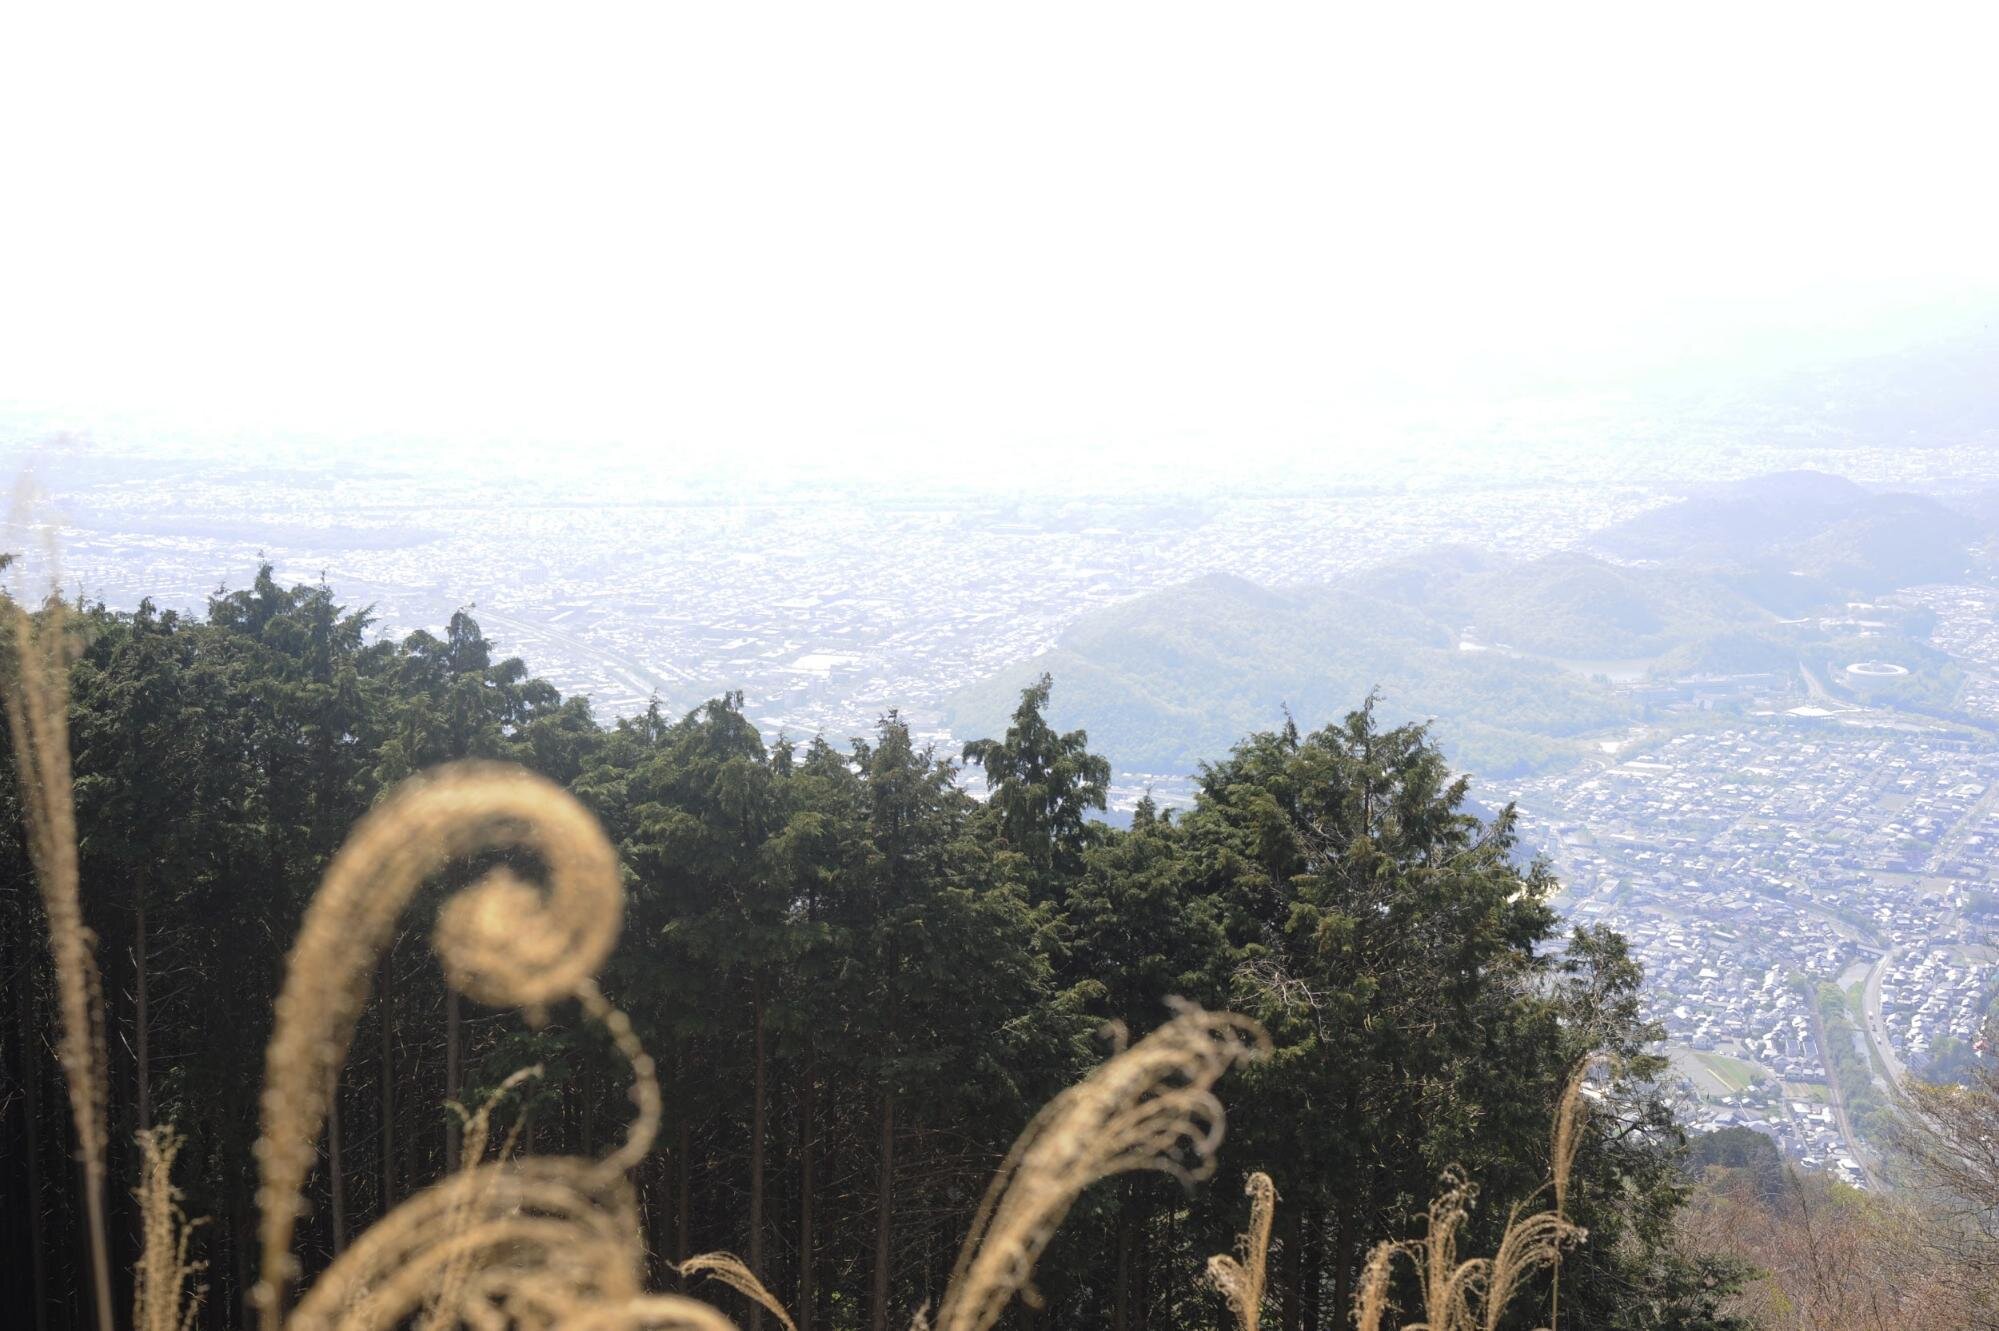  Mt Hiei 